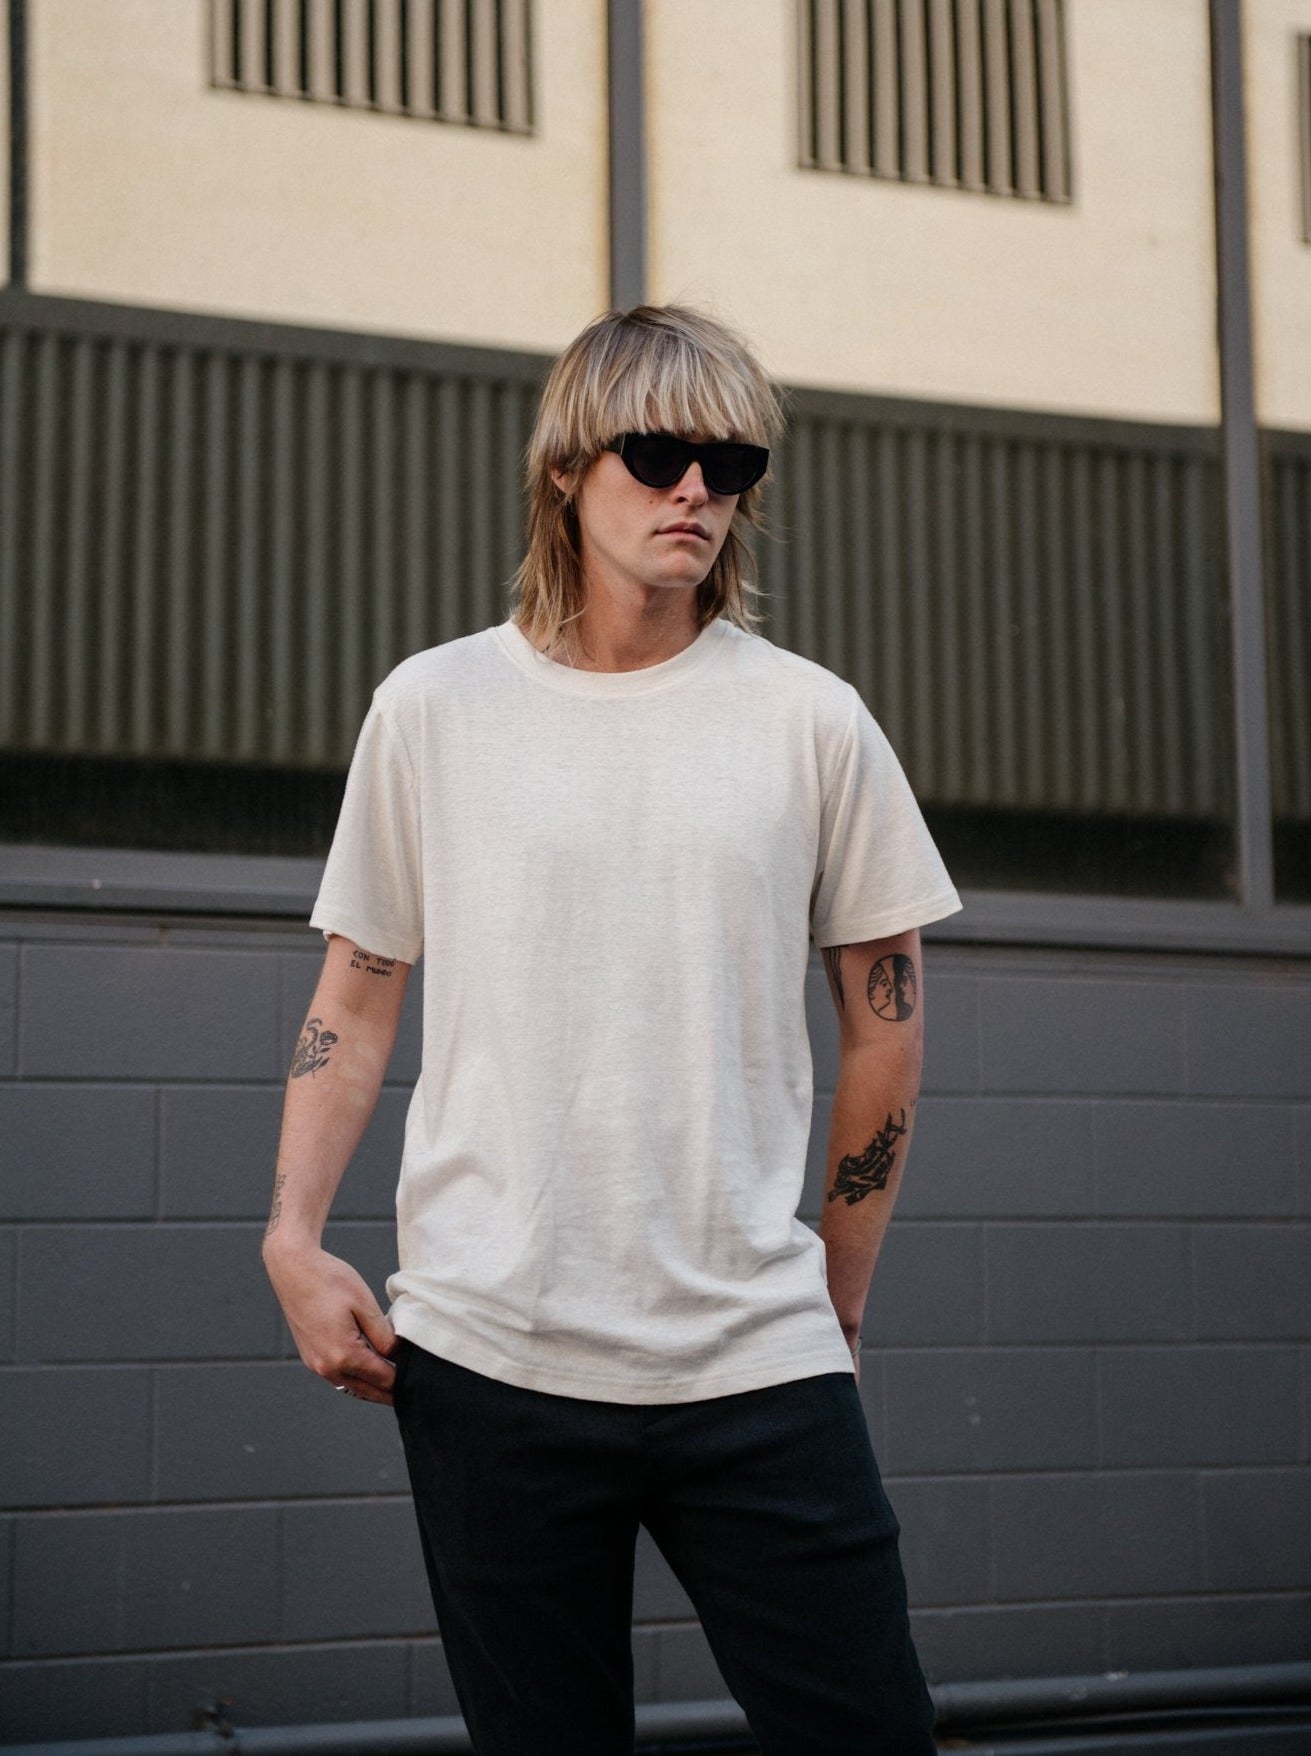 Hemp Clothing Australia - Mens Classic T-Shirt - Natural White